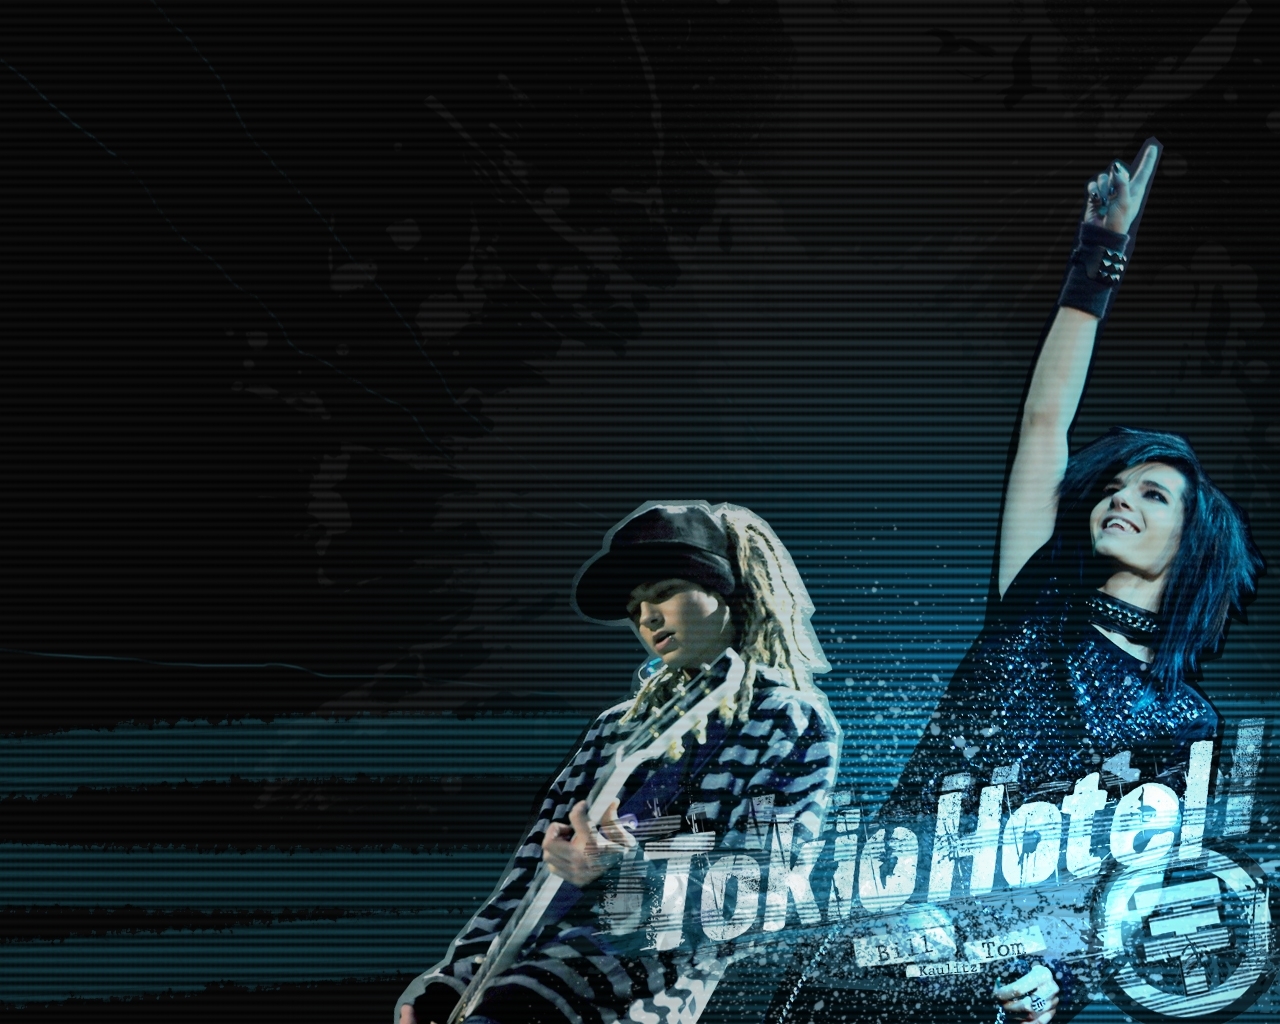 Tokio Hotel Wallpaper